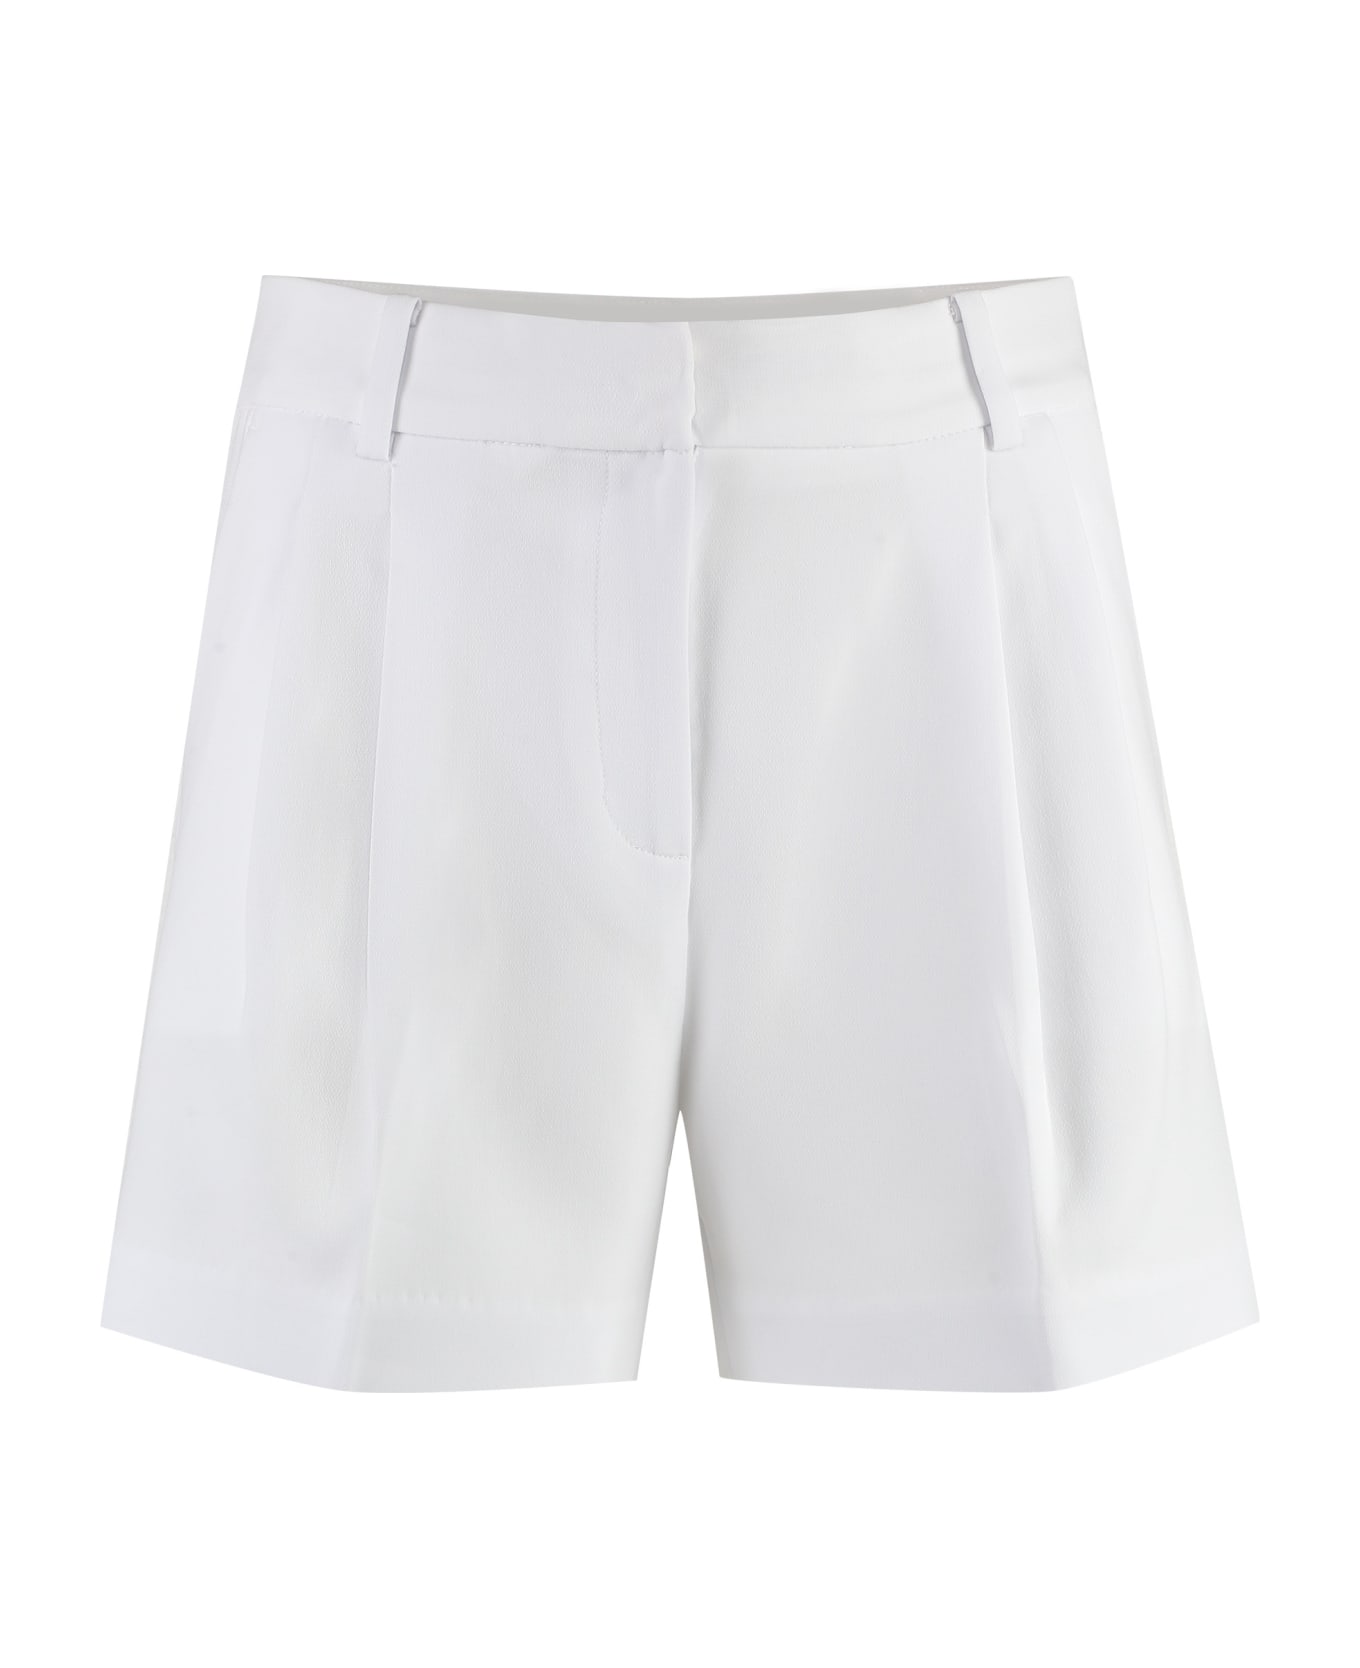 Michael Kors Bermuda Shorts - White